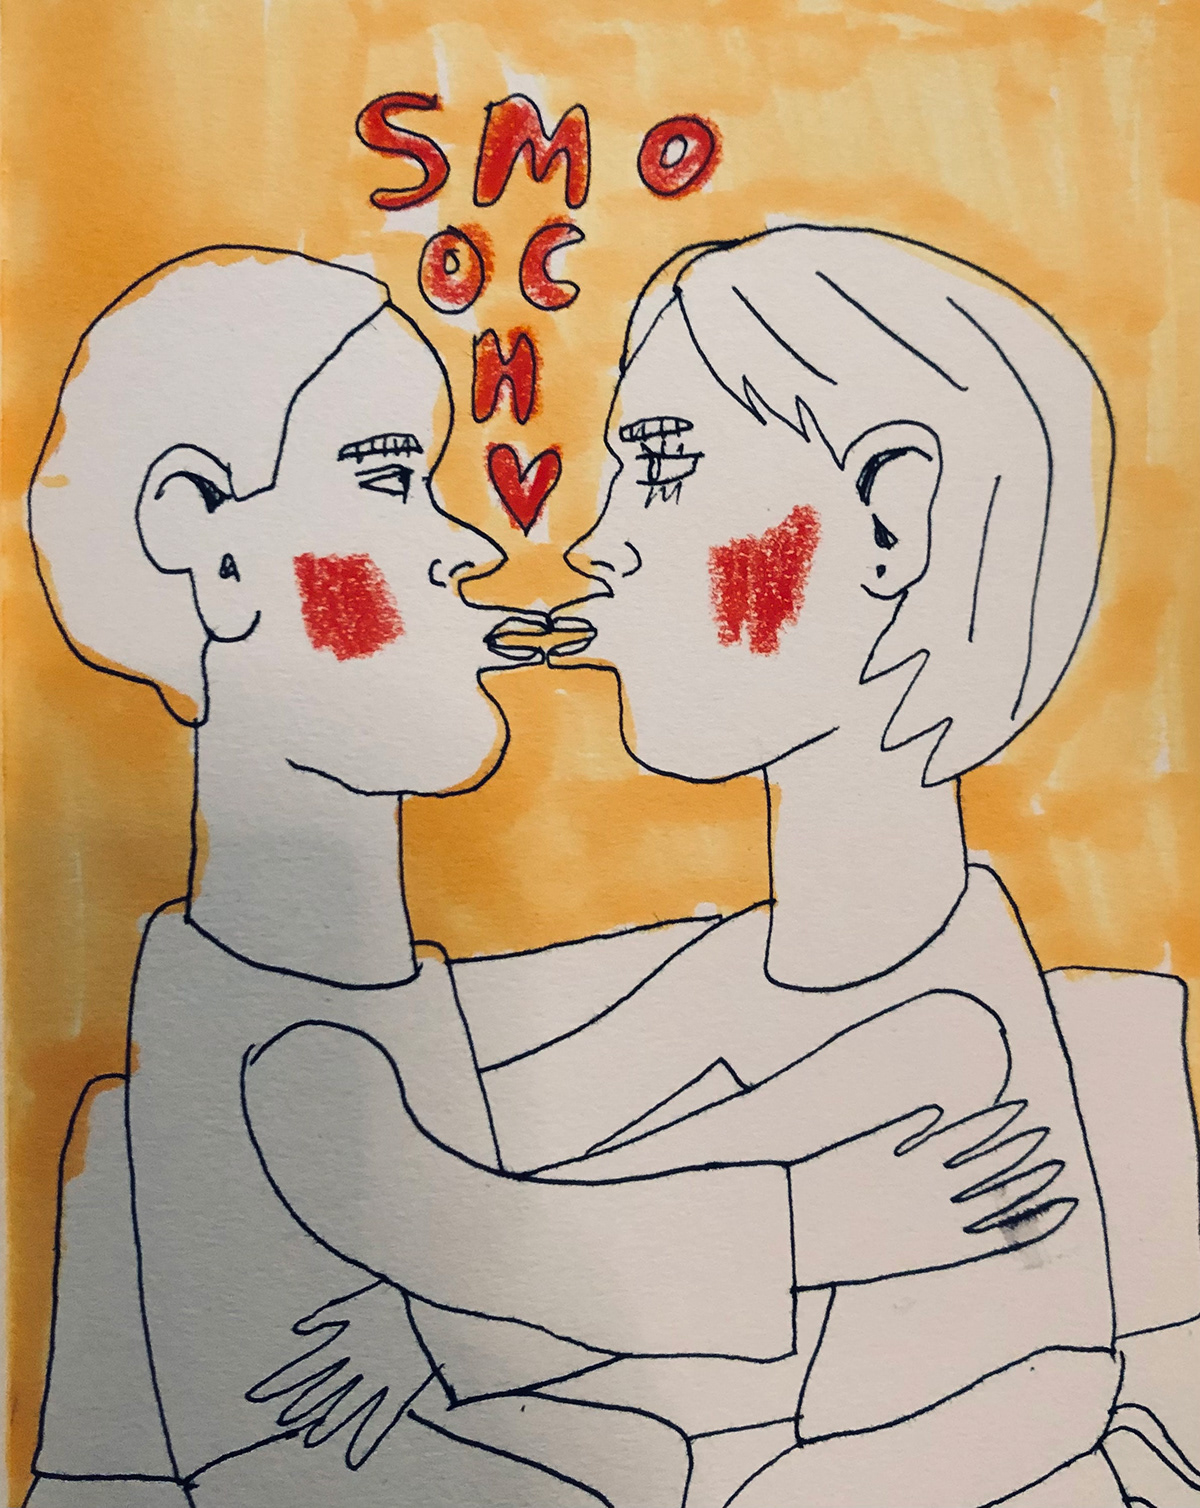 Image may contain: kiss, illustration and drawing